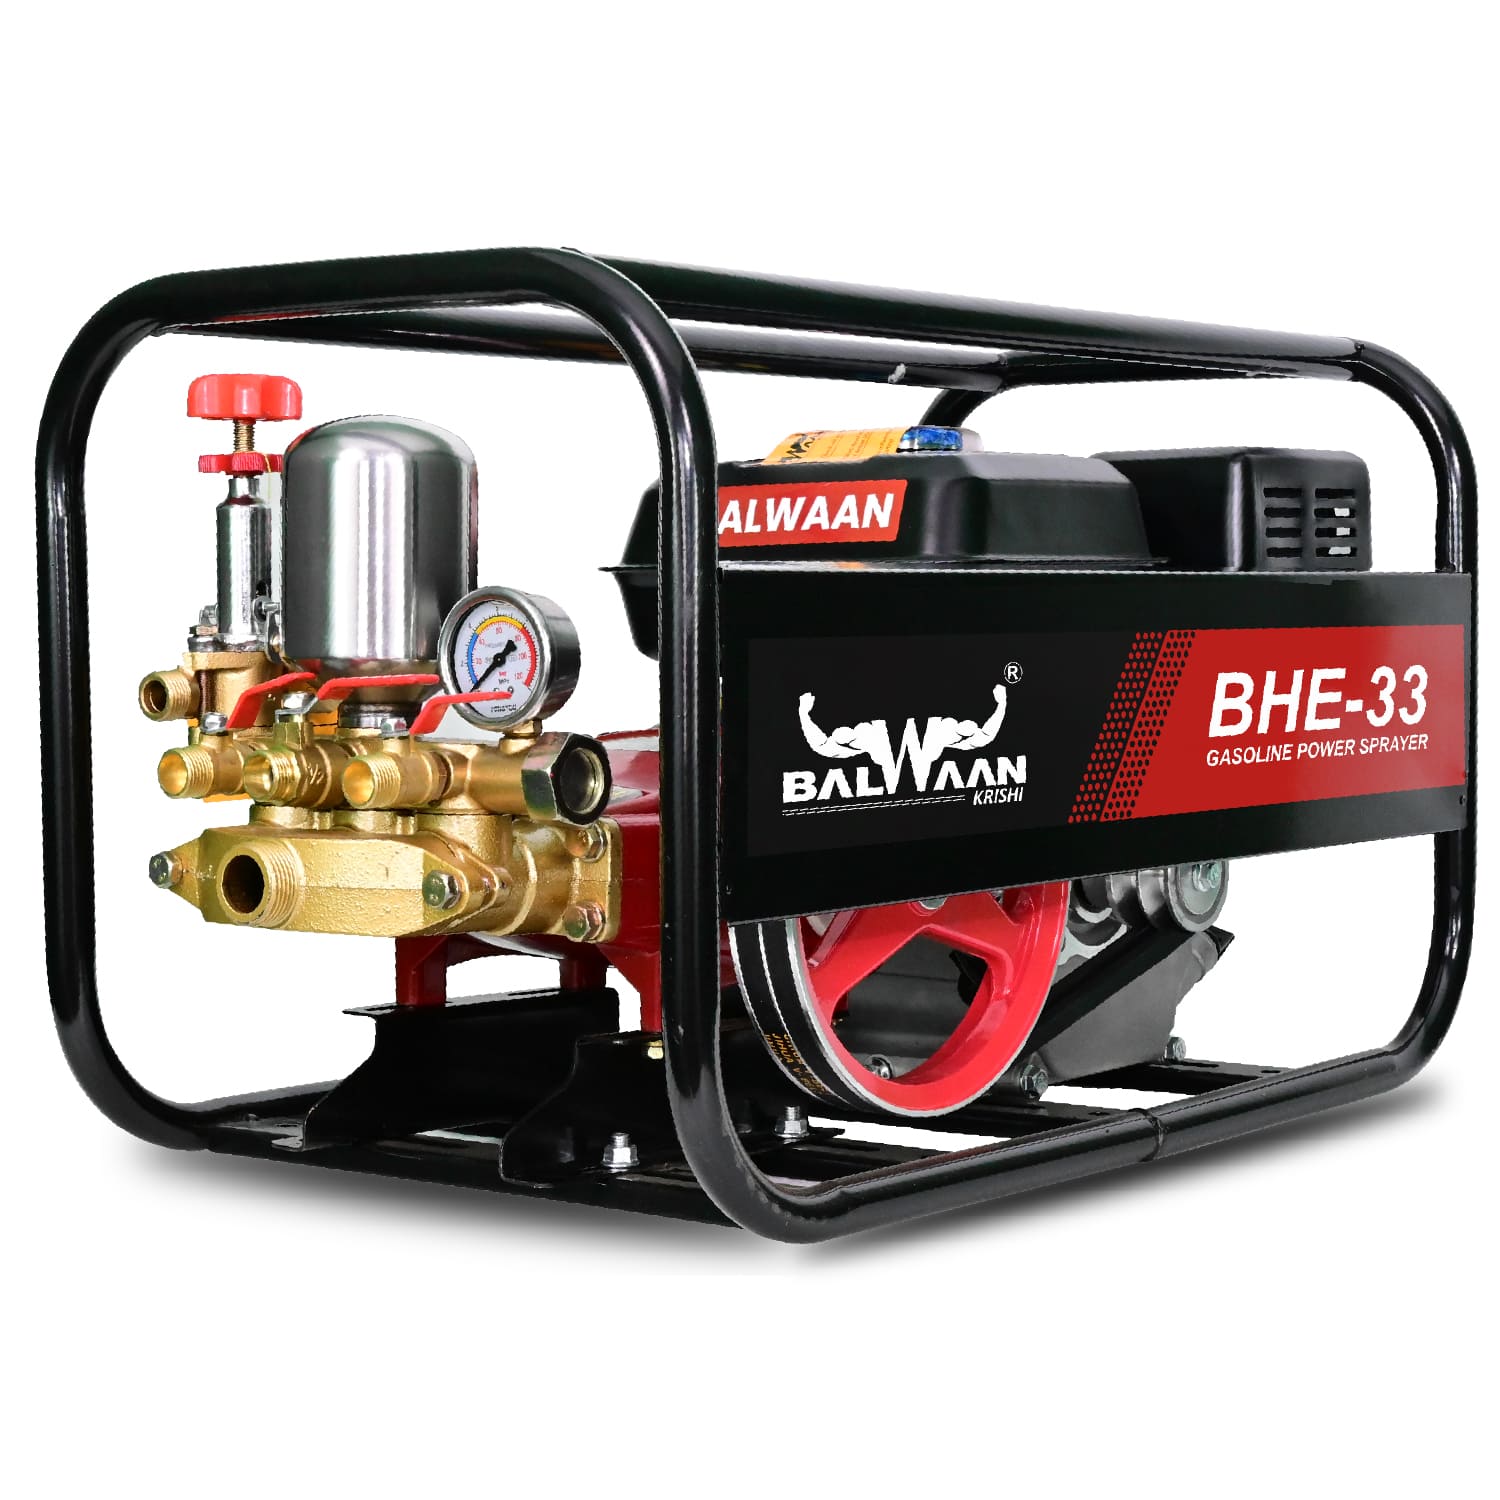 Balwaan 33 No. HTP Sprayer with 6.5HP Engine |BHE-33